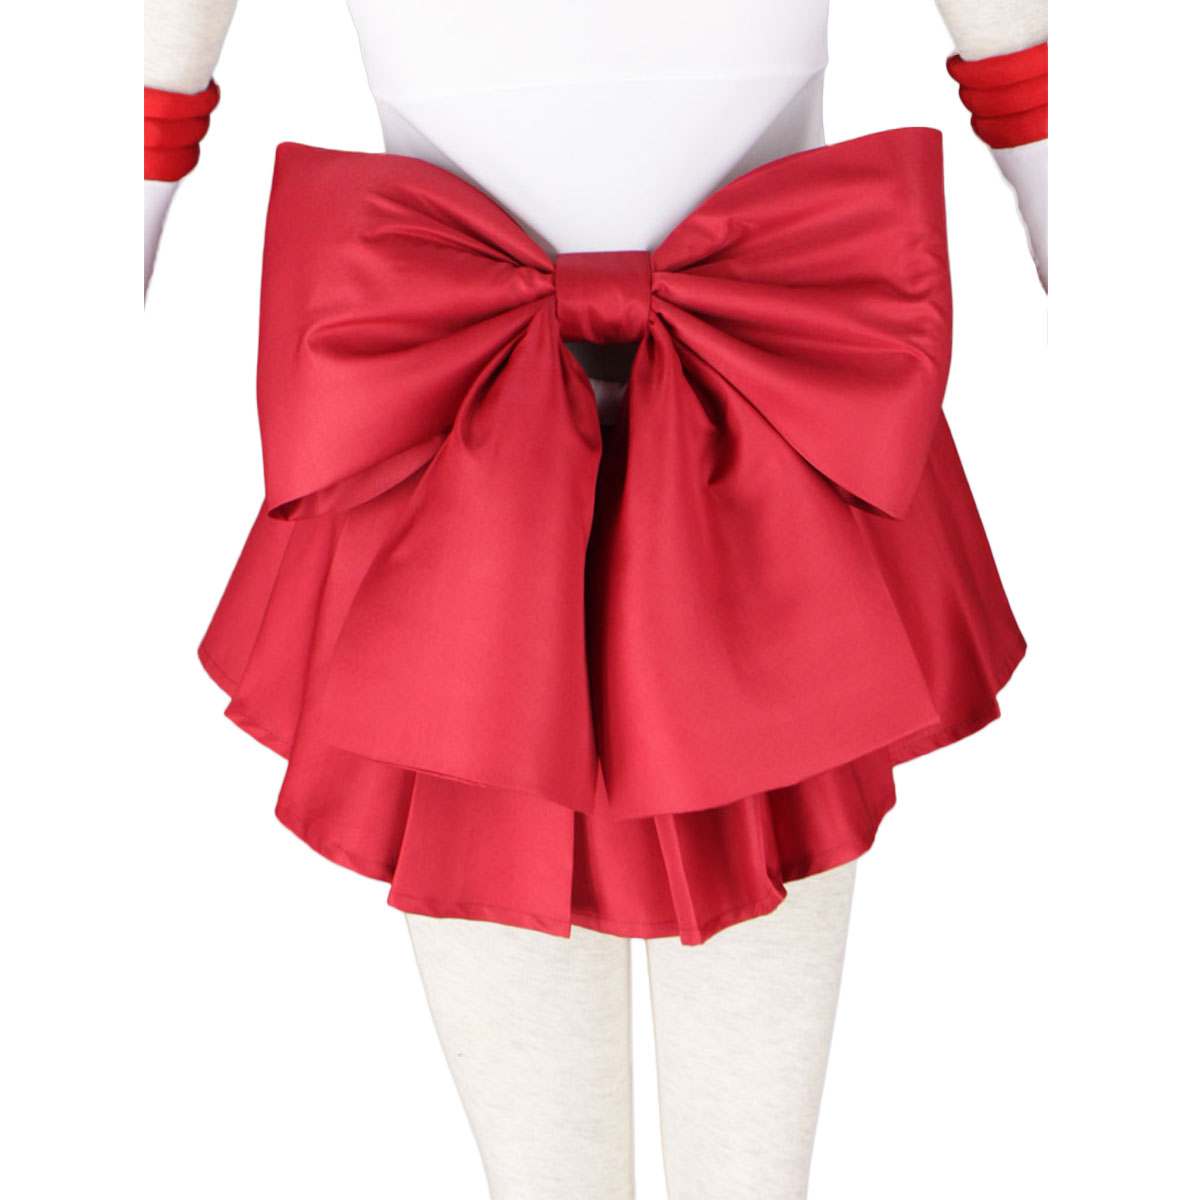 Sailor Moon Hino Rei 1 Cosplay Costumes AU